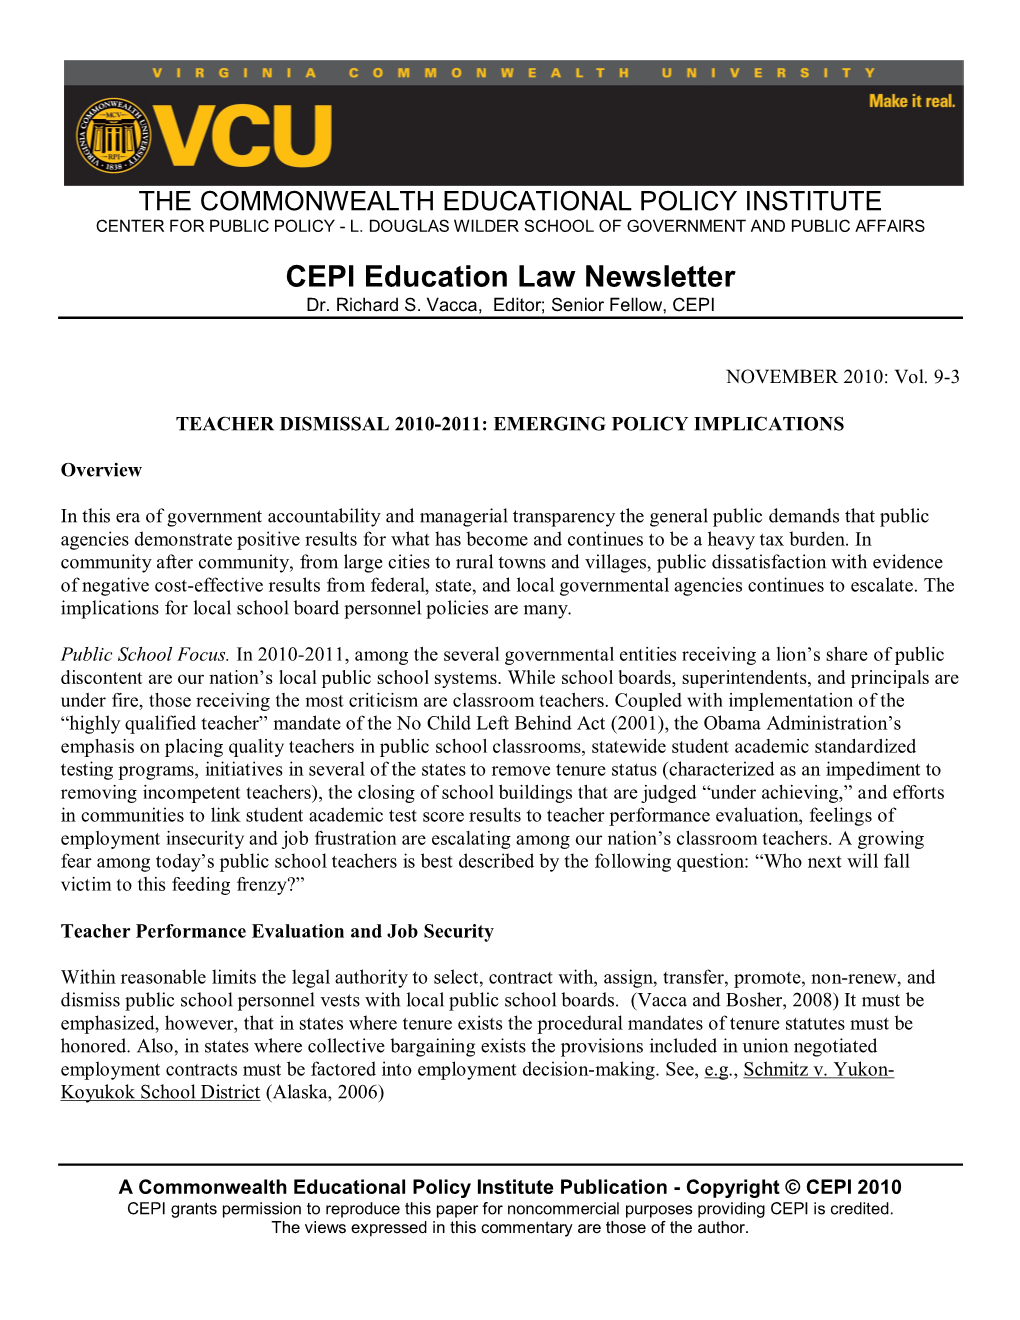 Teacher Dismissal 2010-2011: Emerging Policy Implications